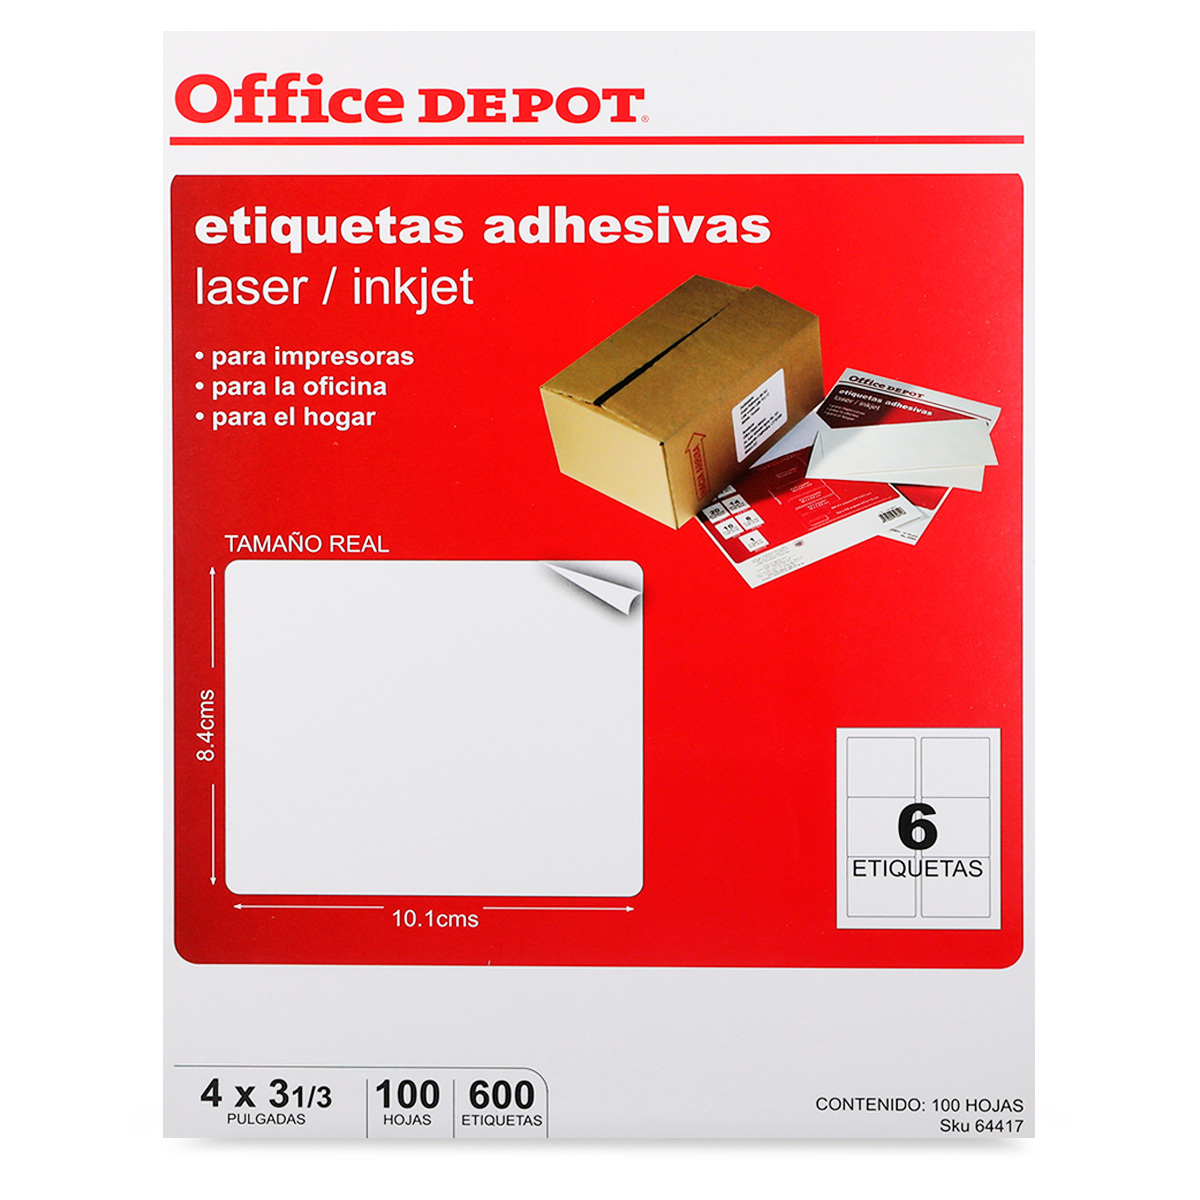 temblor Fraternidad Raza humana Etiquetas Adhesivas para Impresión Office Depot 8.4 x 10.1 cm Blanco 600  etiquetas | Office Depot Mexico